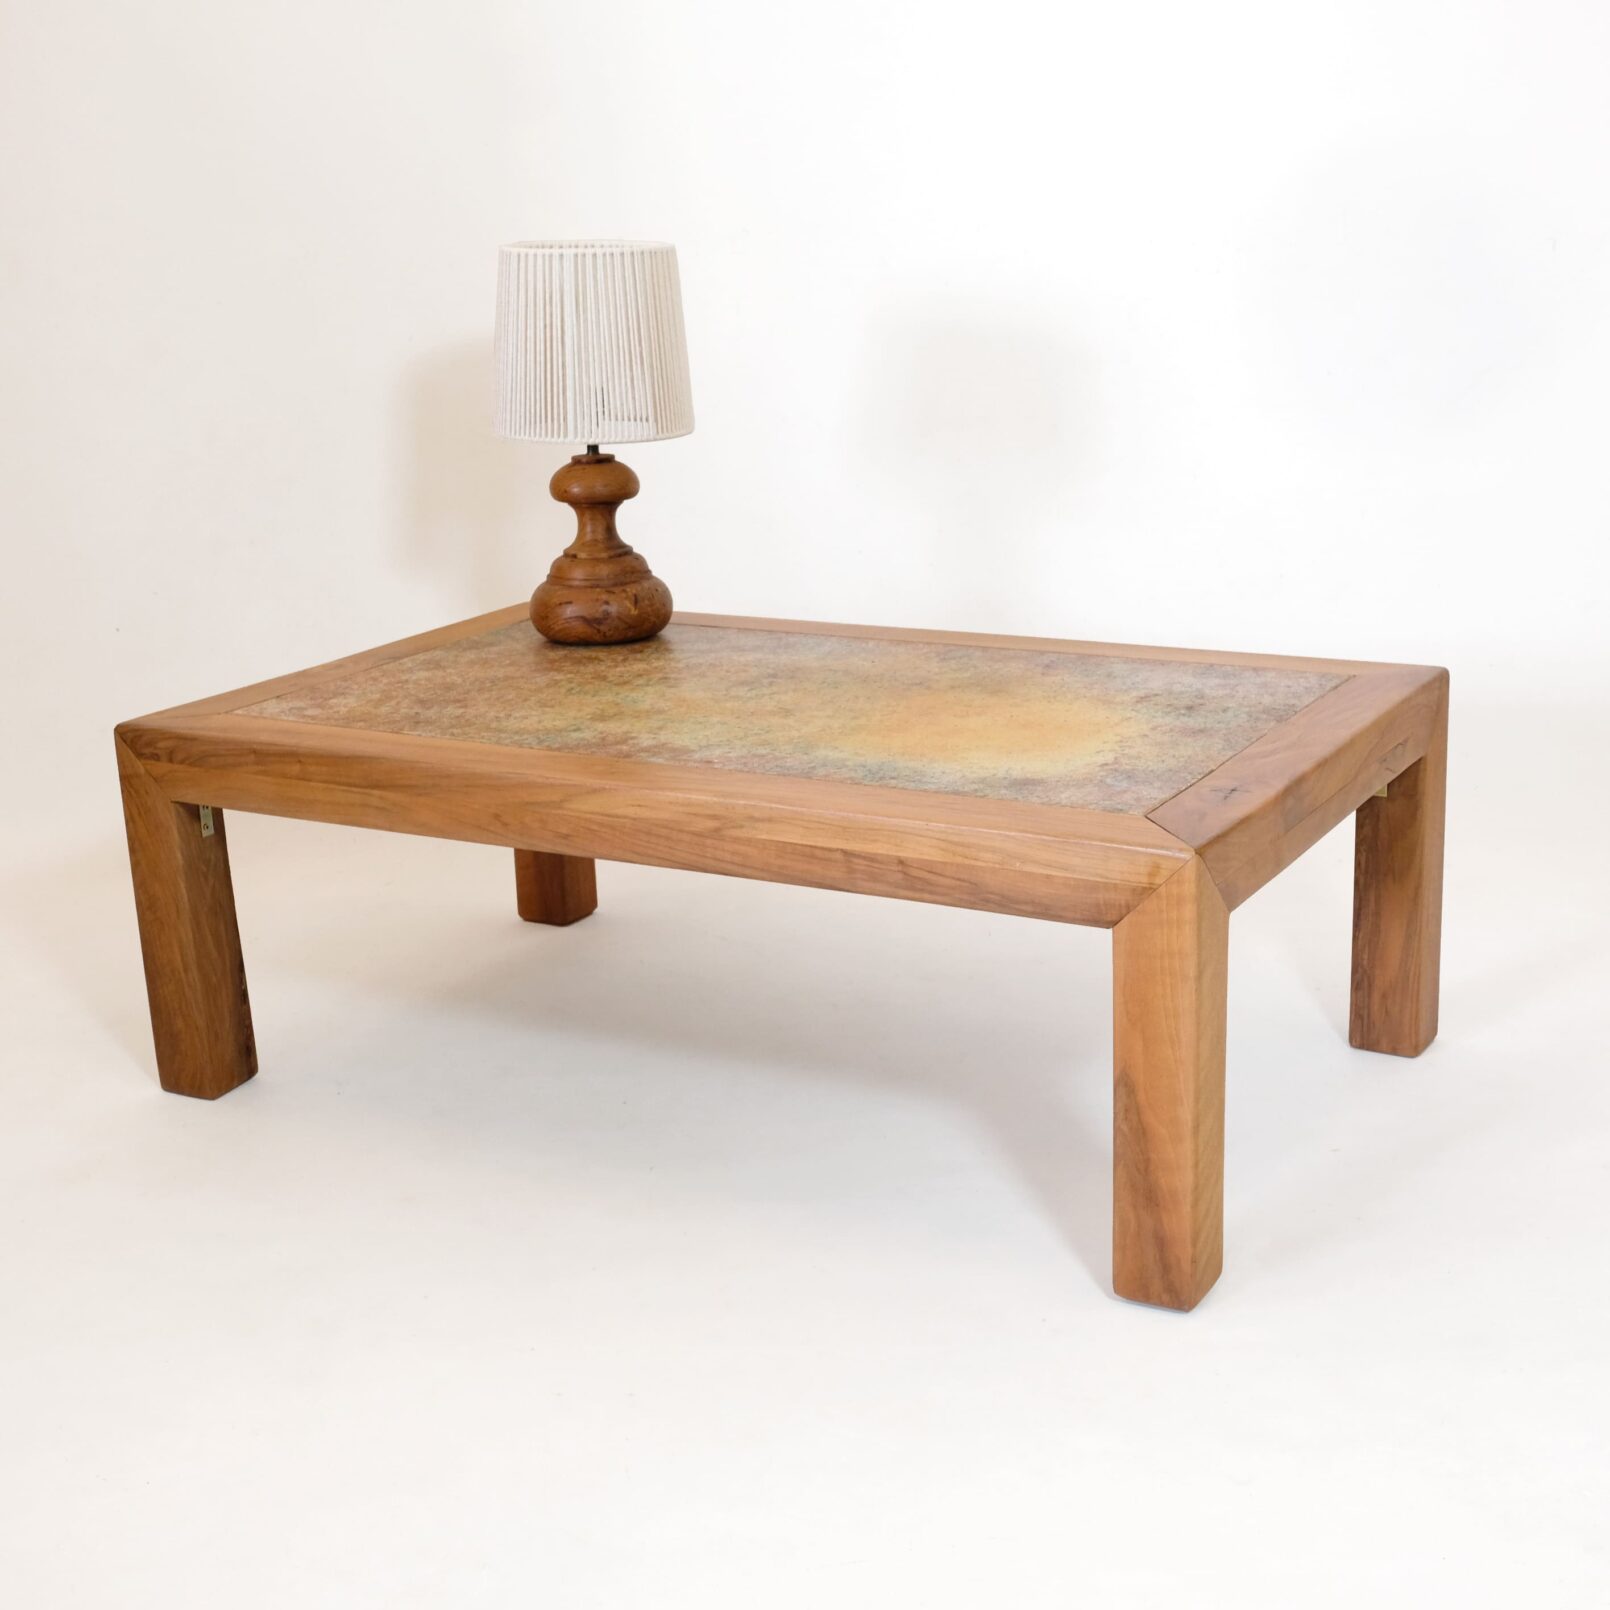 Bernard Buffat,  coffee table with a ceramic tabletop, 1970s.